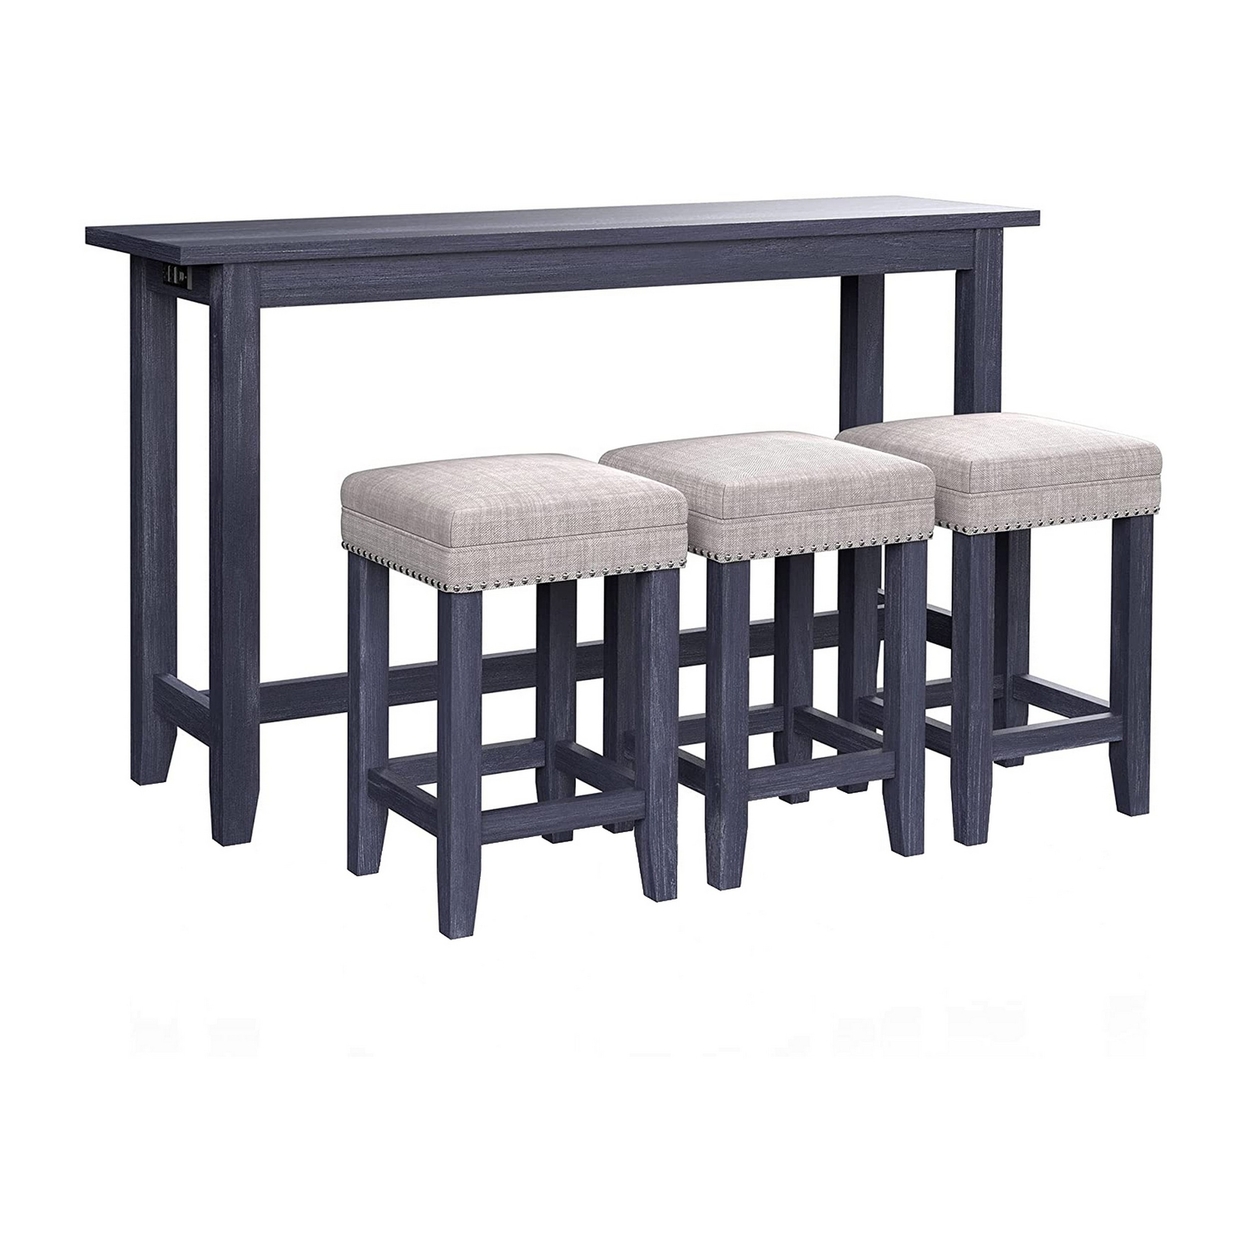 Eala 4 Piece Counter Height Table And Stool Set, Blue Wood, Gray Fabric- Saltoro Sherpi